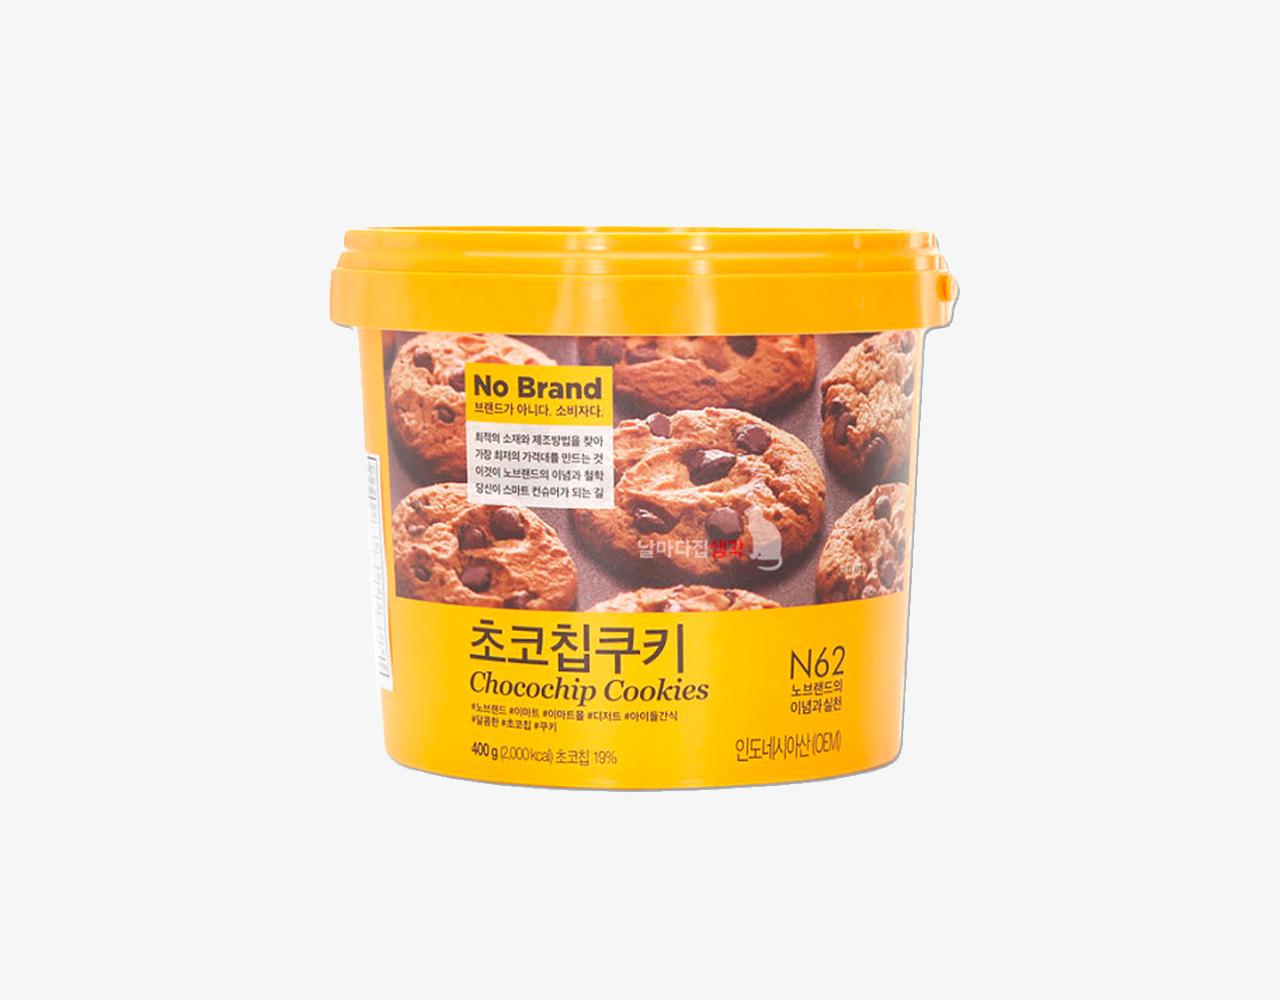 korean brand no brand chocolatechip cookies in yellow tub